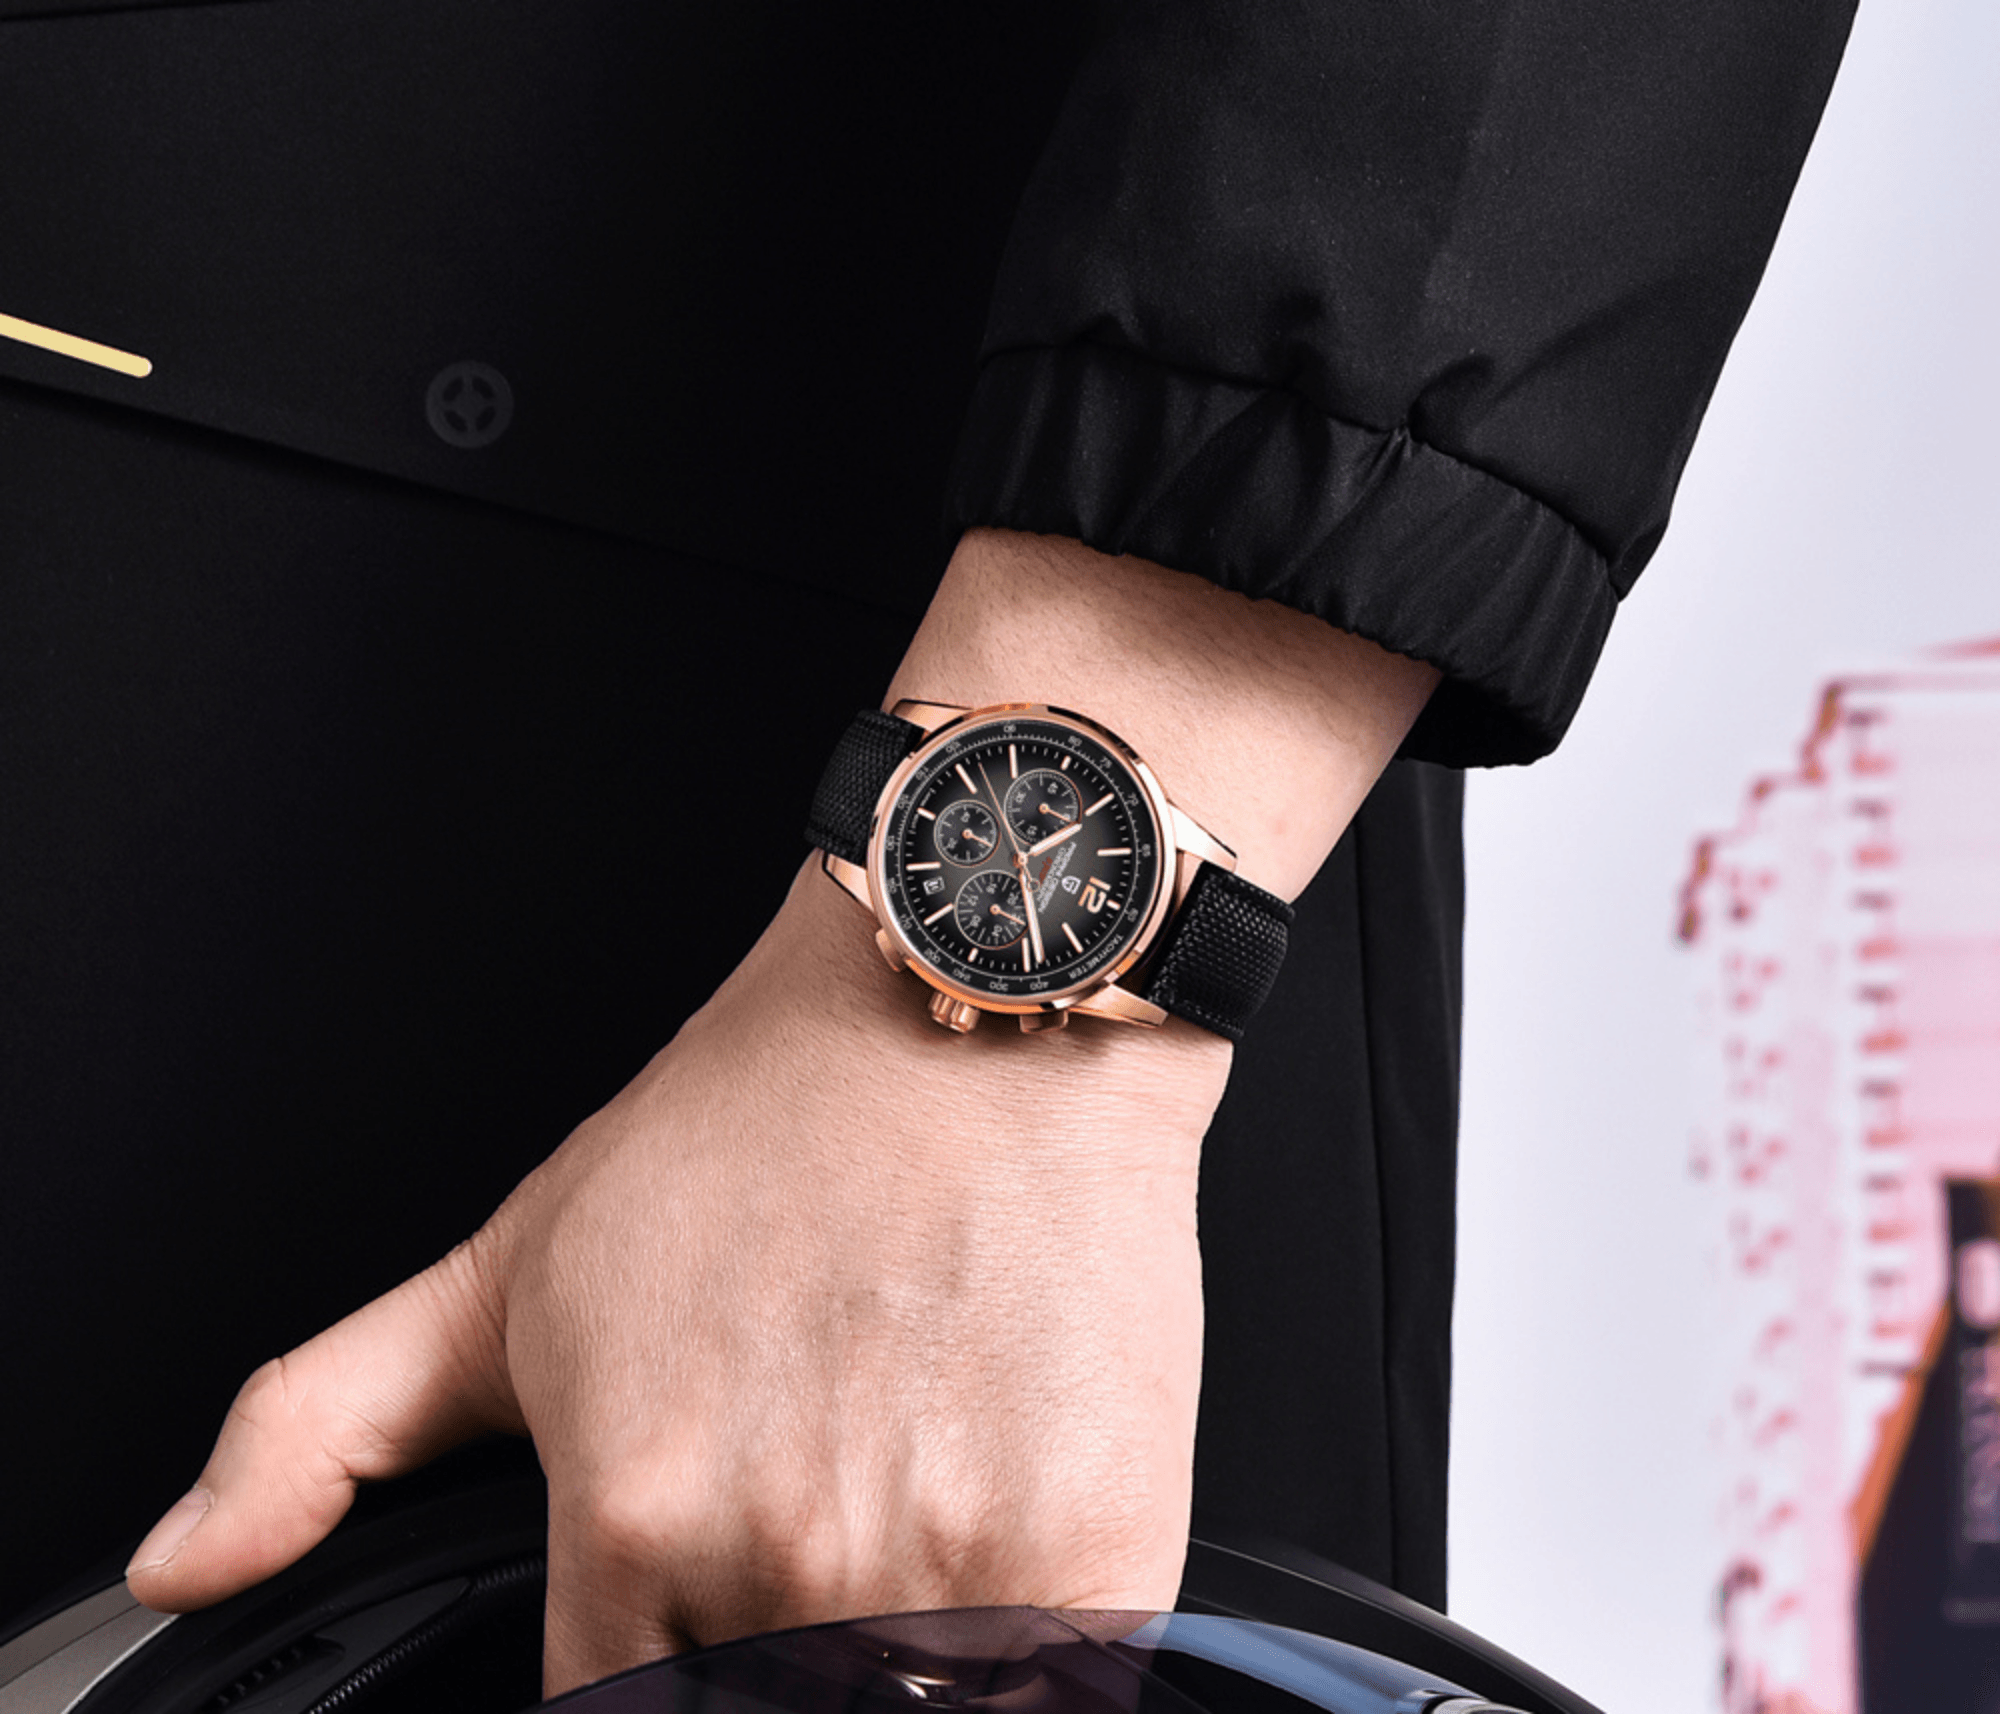 Pagani Design | Luxury | Waterproof Mechanical Automatic Movement SeikoVK63 | Stainless Steel Men's 40MM Watch Code 11.59